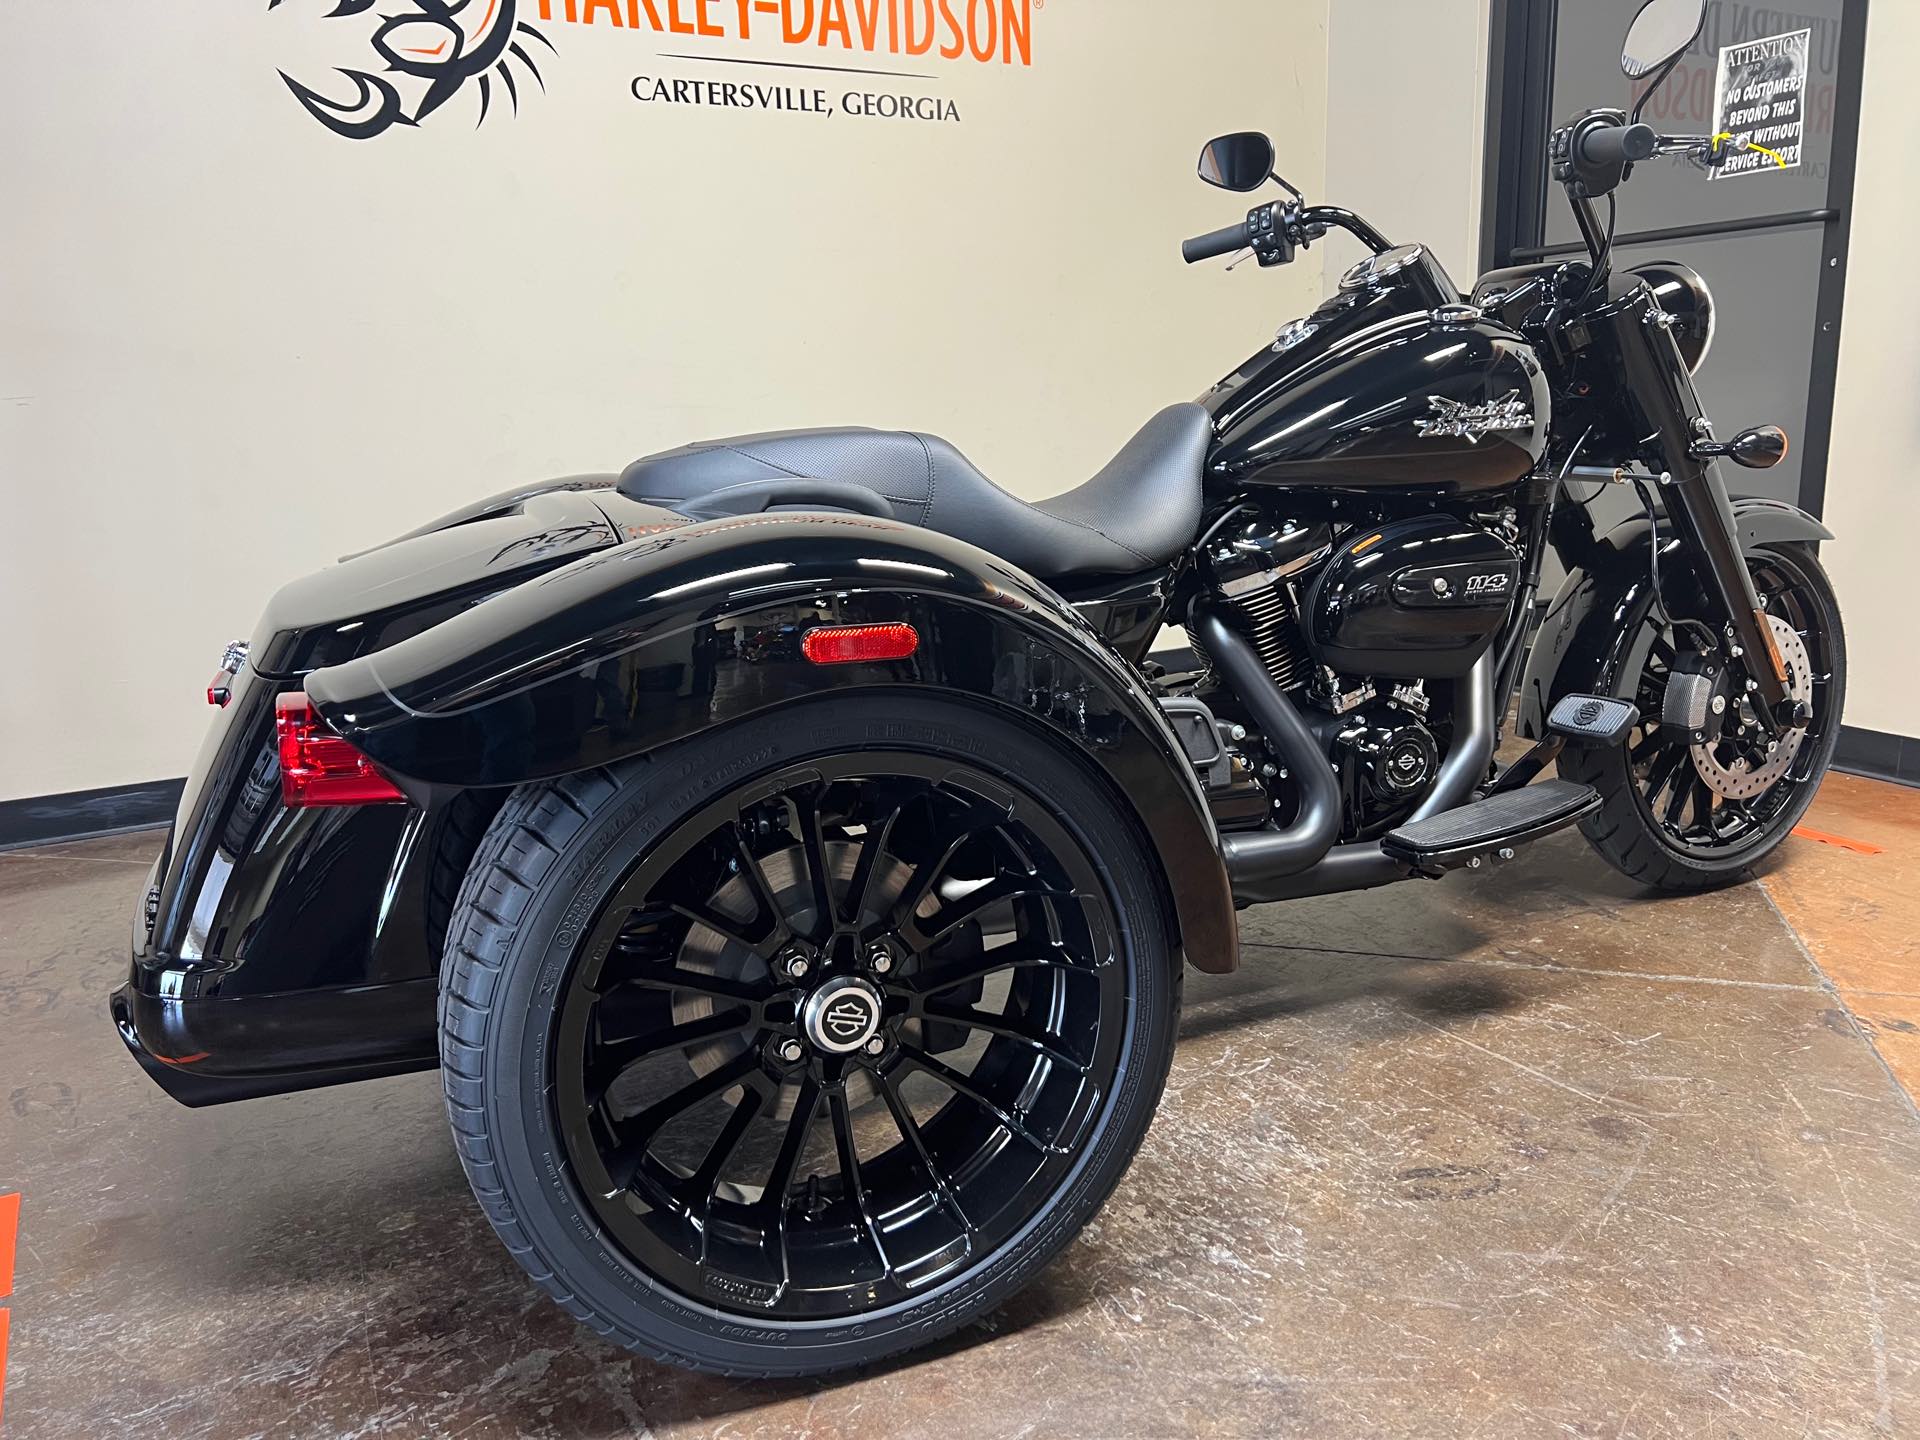 2023 Harley-Davidson Trike Freewheeler at Southern Devil Harley-Davidson